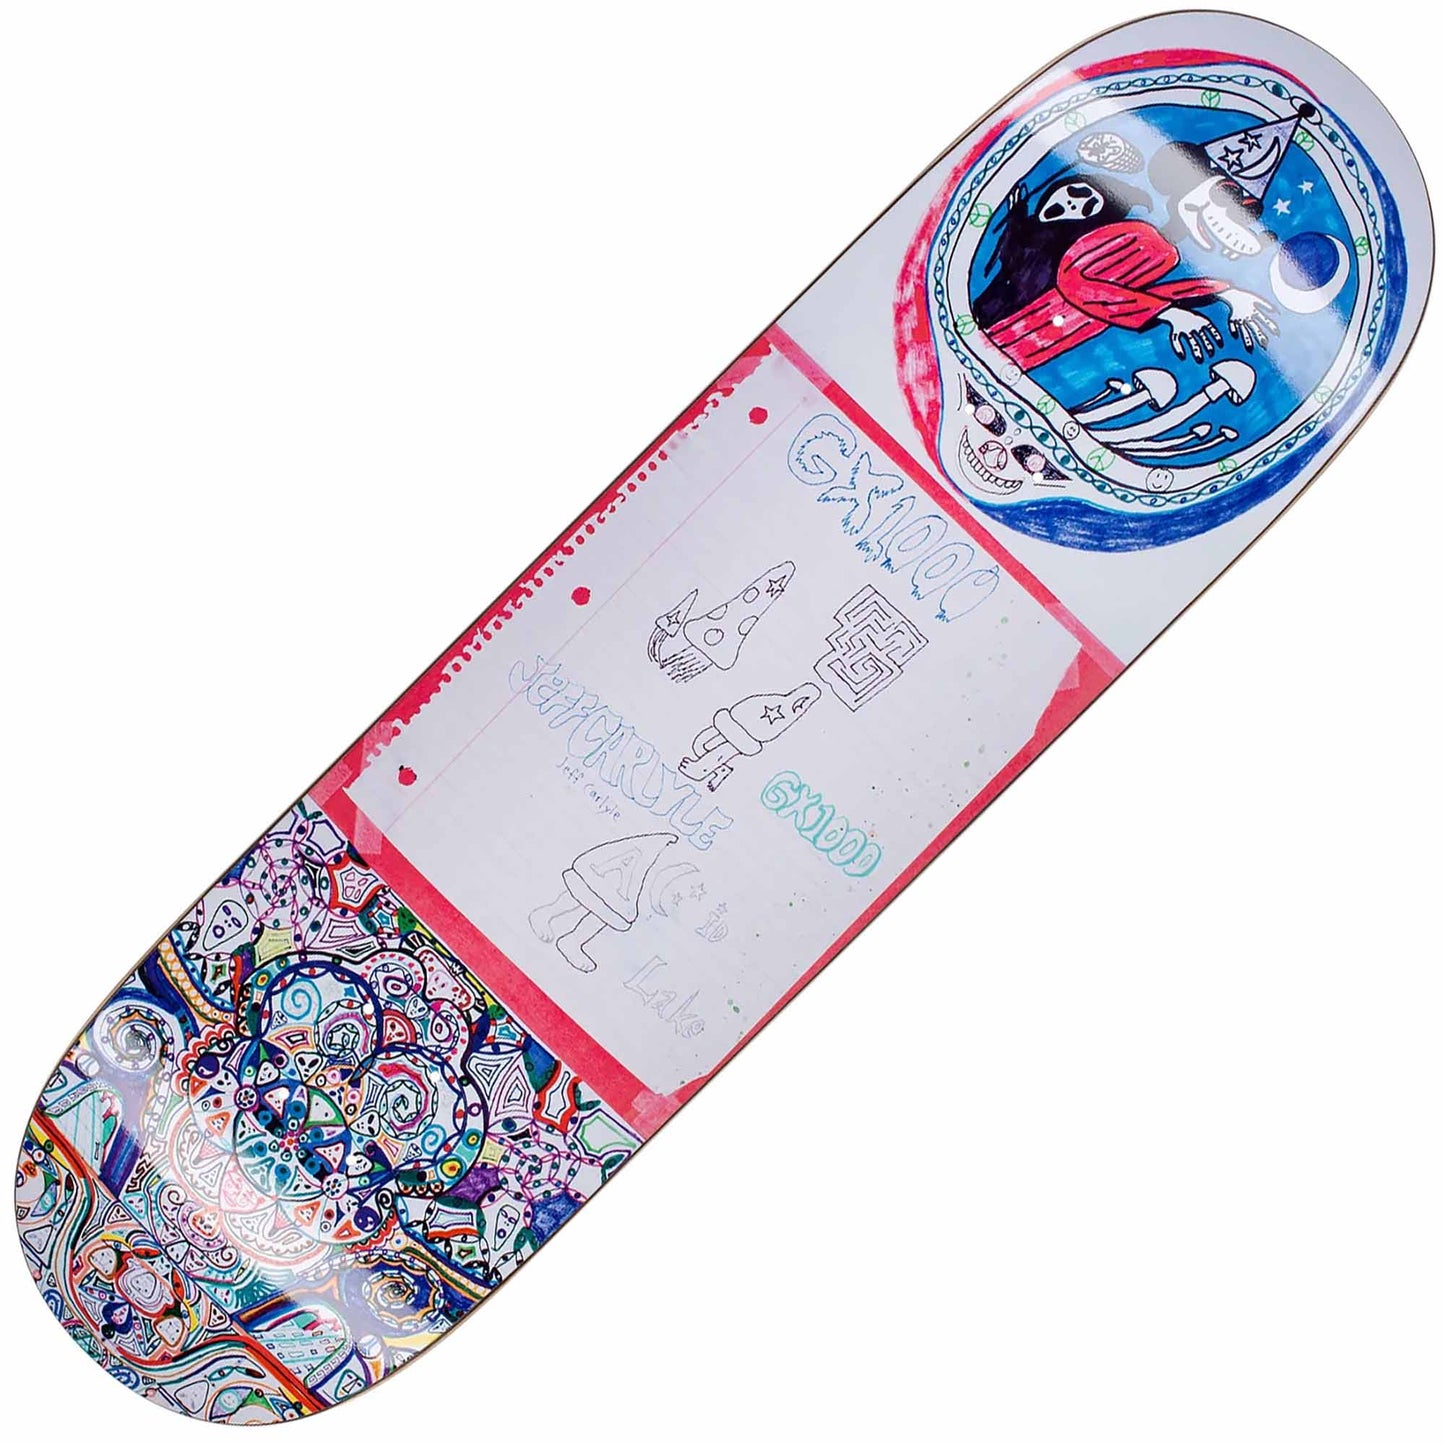 GX1000 Acid Lake "Carlyle" Deck (8.25”) - Tiki Room Skateboards - 1